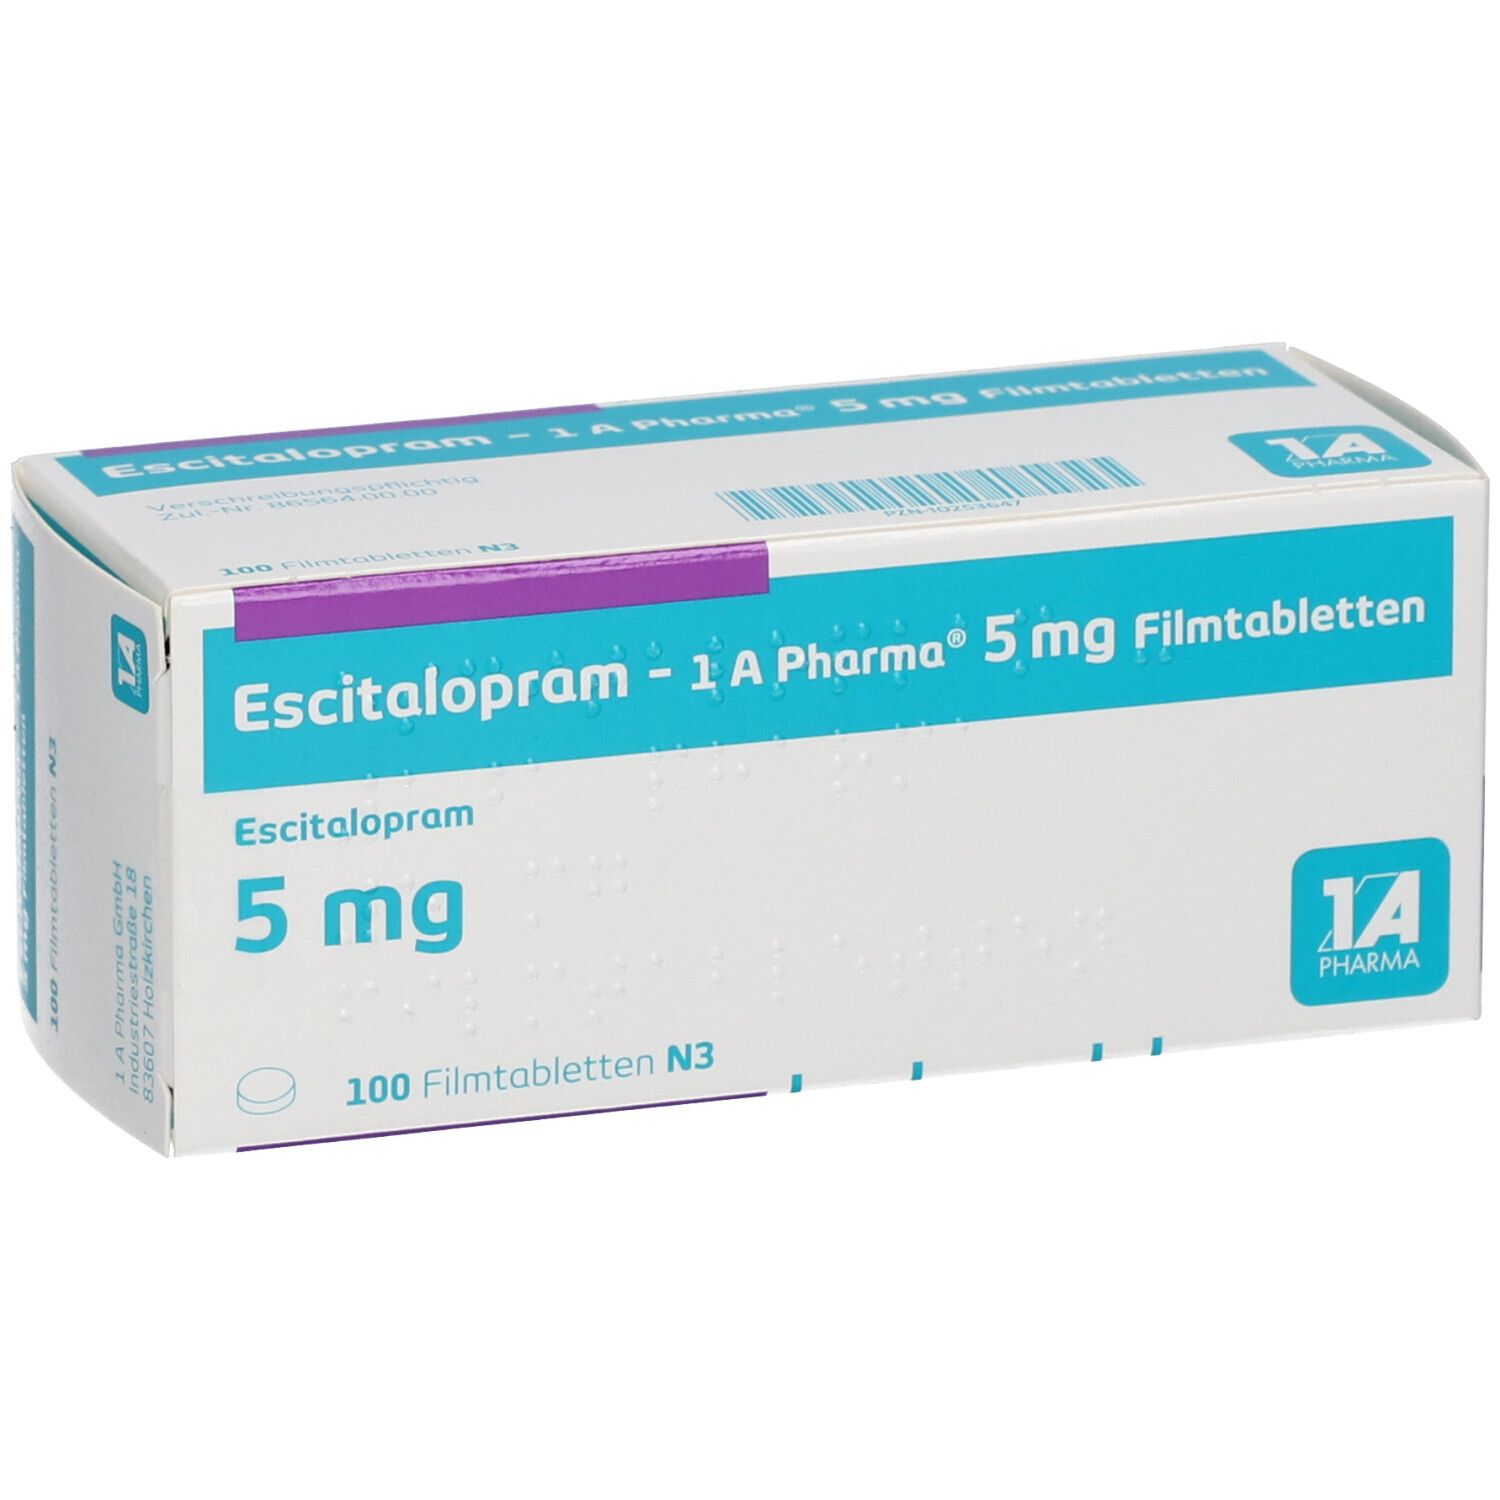 Escitalopram 1A Pharma® 5Mg